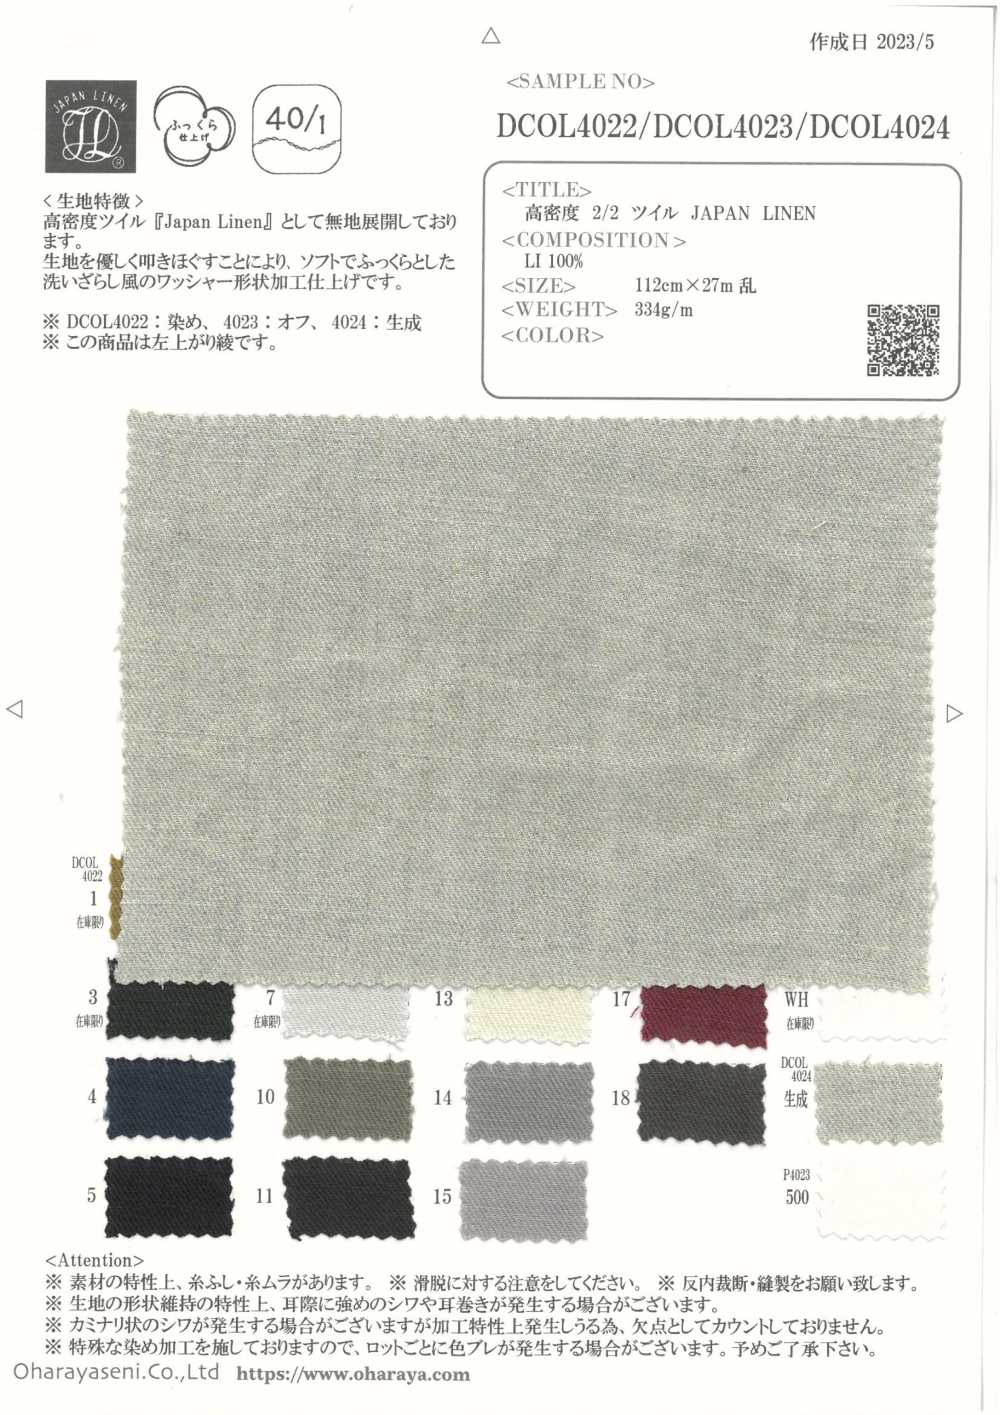 DCOL4022 High Density 2/2 Twill JAPAN LINEN[Textile / Fabric] Oharayaseni